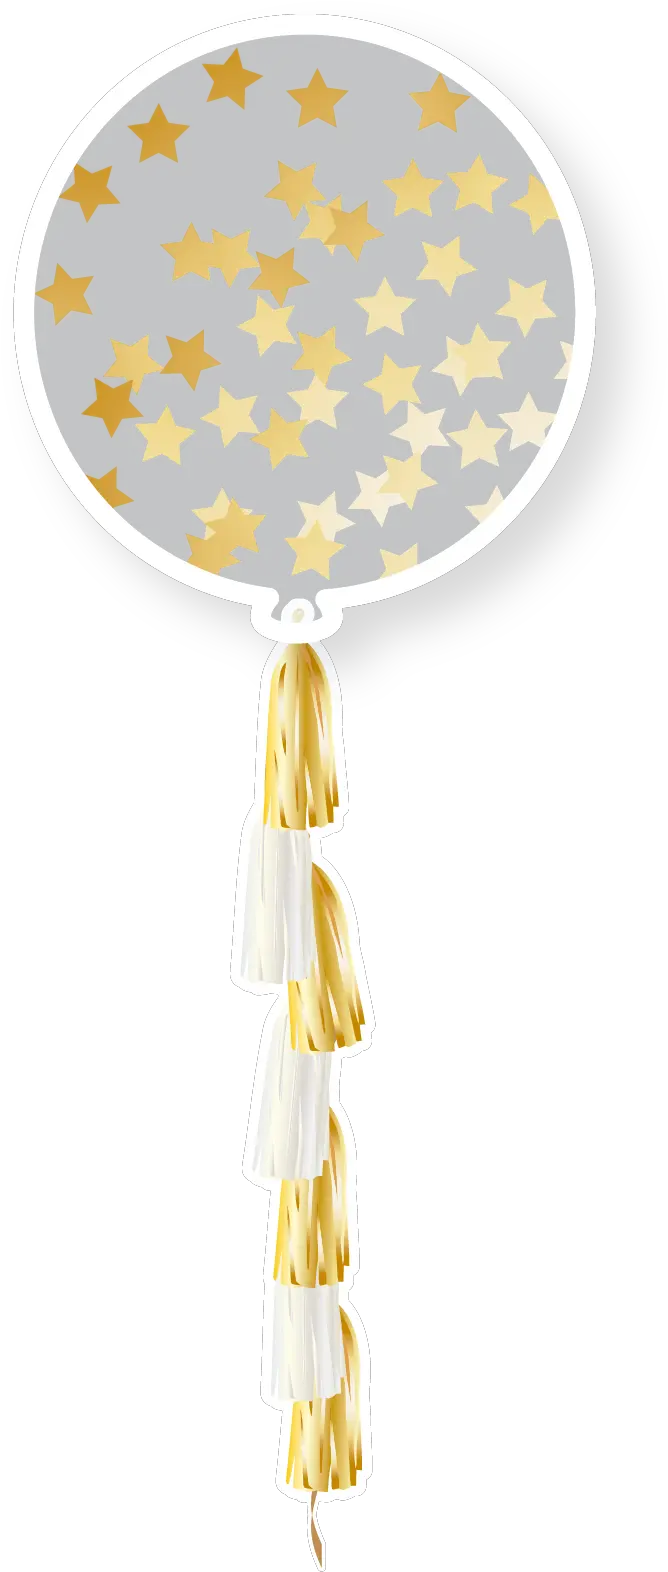 36 Transparent Balloon W Golden Star Confetti U0026 Tassle 1pc Balloon Png Confetti Transparent